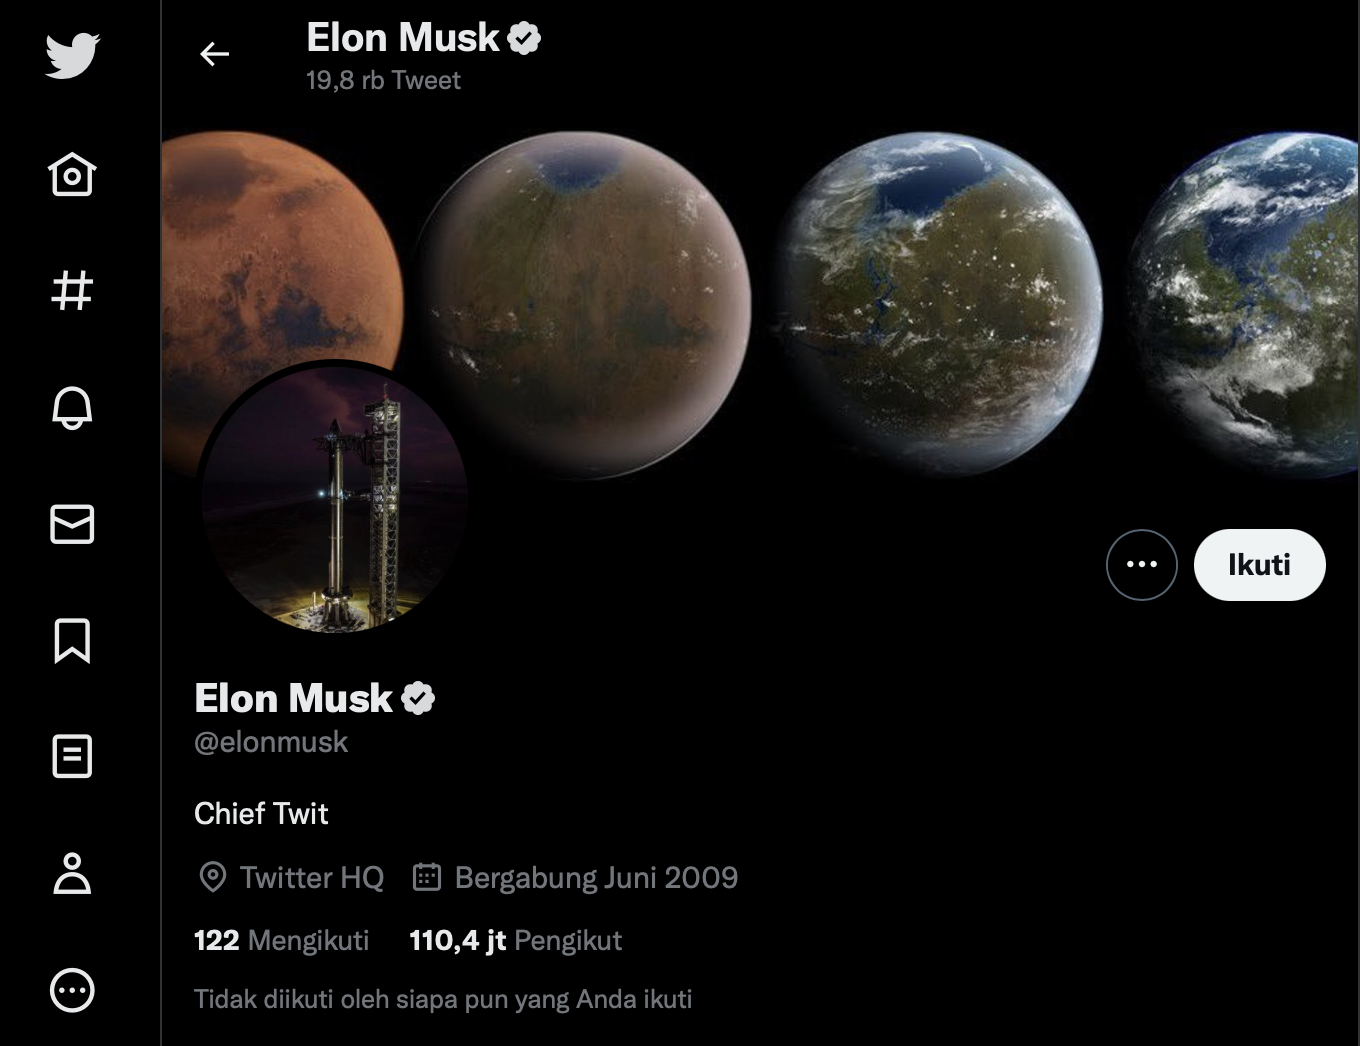 Elon Musk Beli Twitter Seharga Rp682 Triliun, Bagaimana Nasib Twitter? - Elon Musk as Chief Twitter